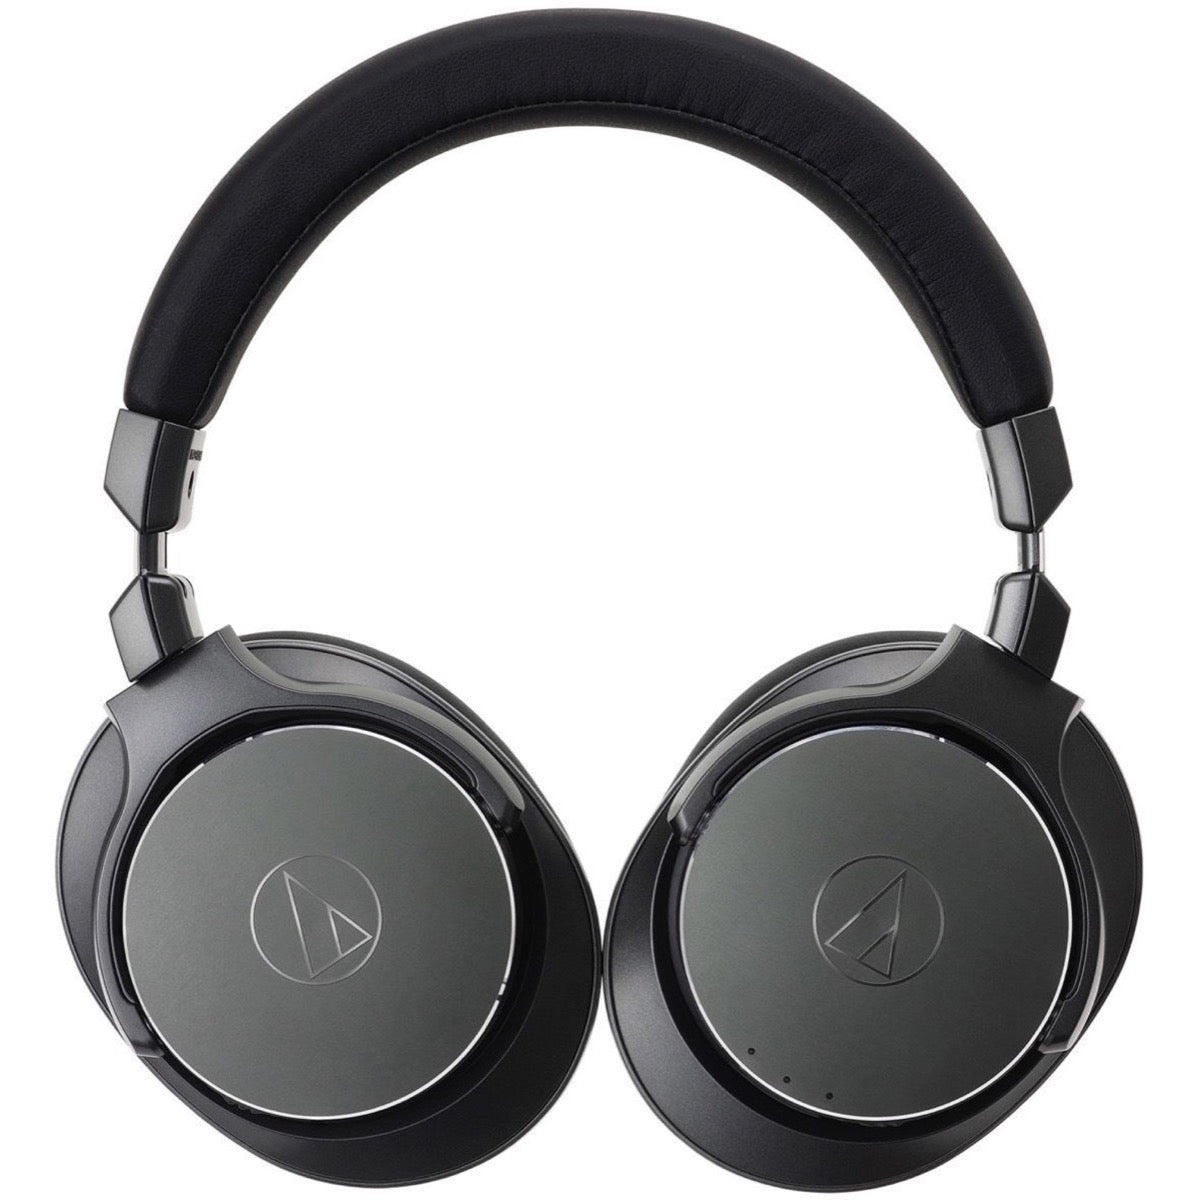 Audio-Technica ATH-DSR7BT Wireless Over-Ear Headphones